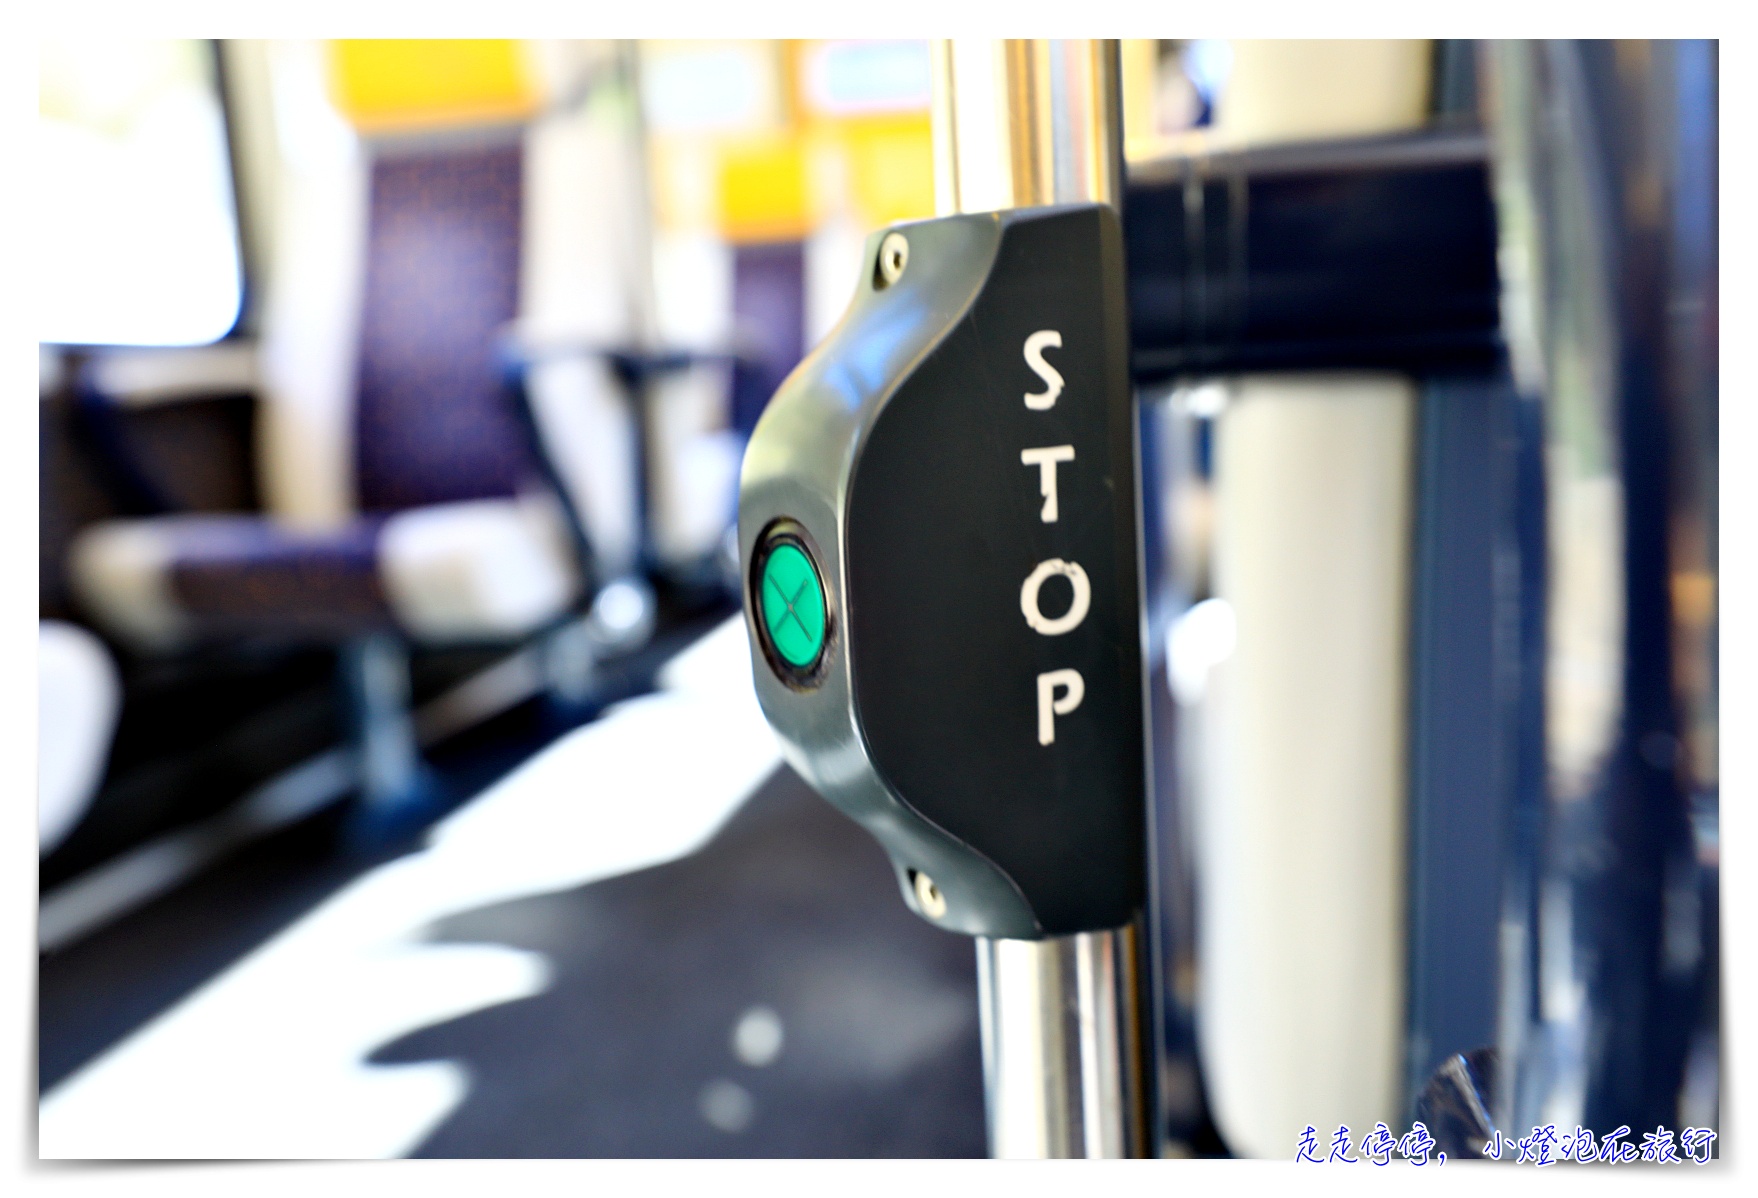 STOP ON REQUEST，瑞士部分火車小站，火車跟公車一樣，下車要按鈕才會靠站～被送到仙境的故事～